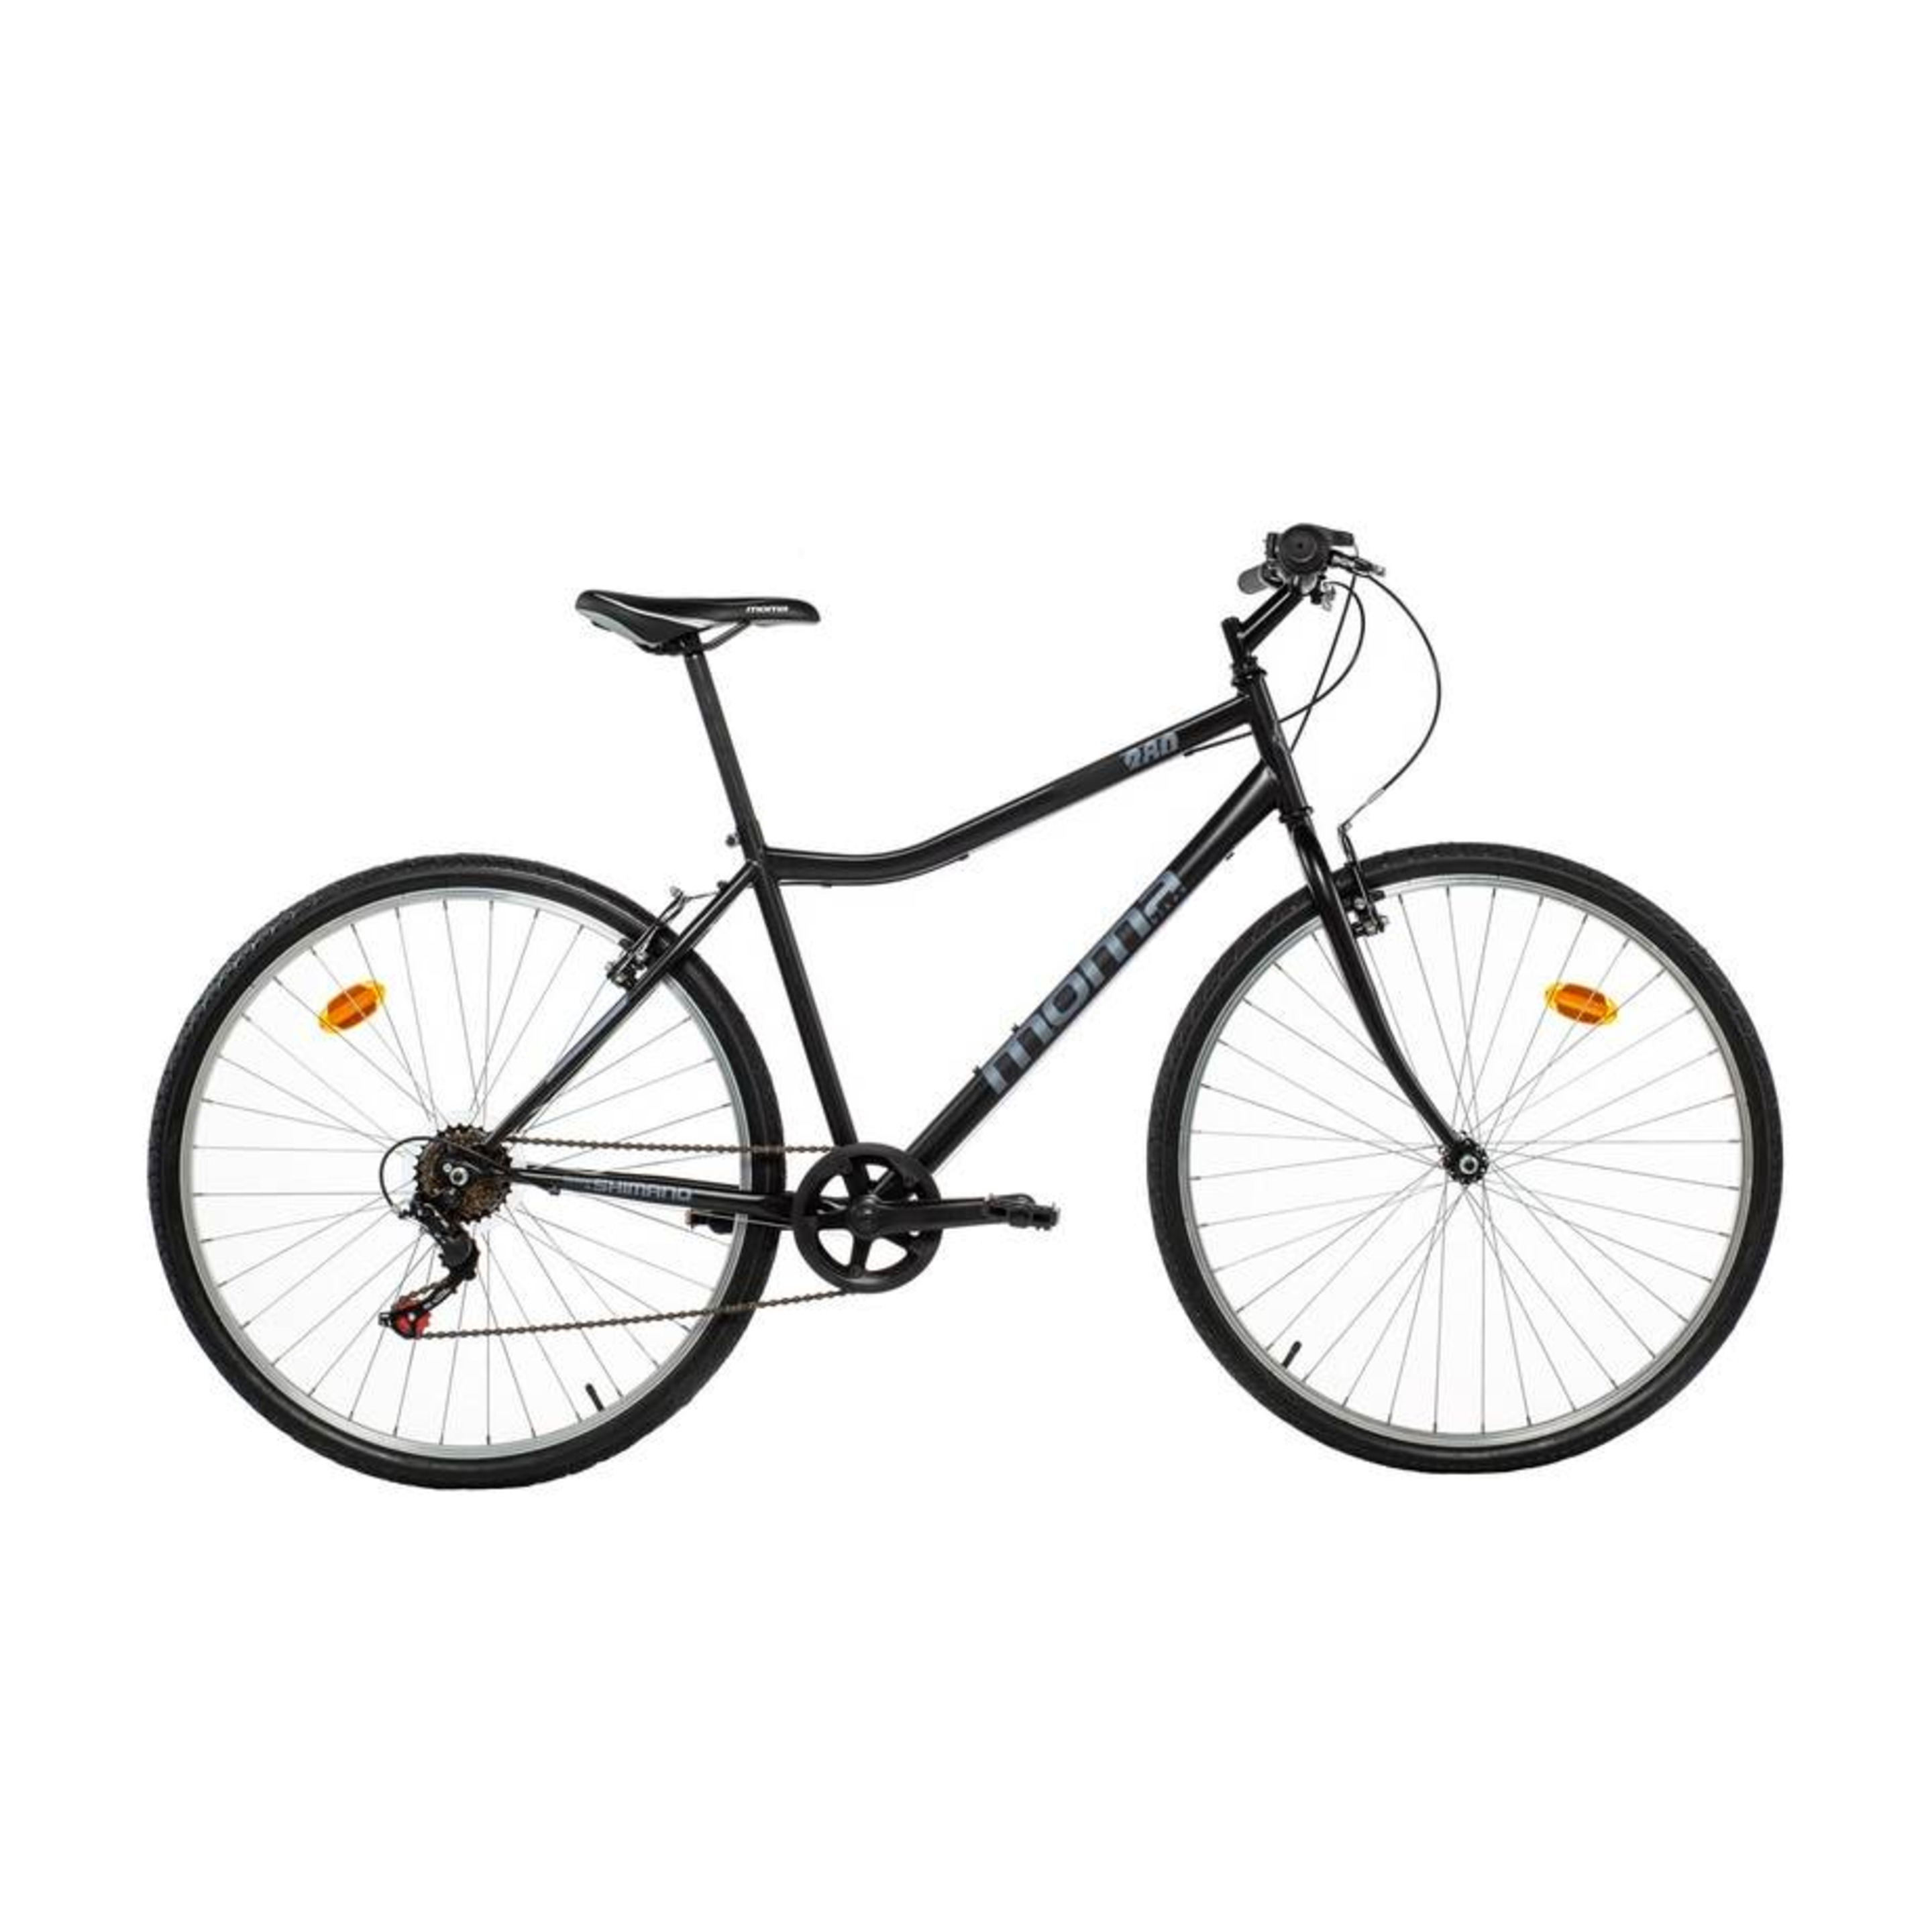 Moma Bikes Bicicleta Paseo Mod280, 28", Shimano 6v, Frenos V-brake Aluminio.